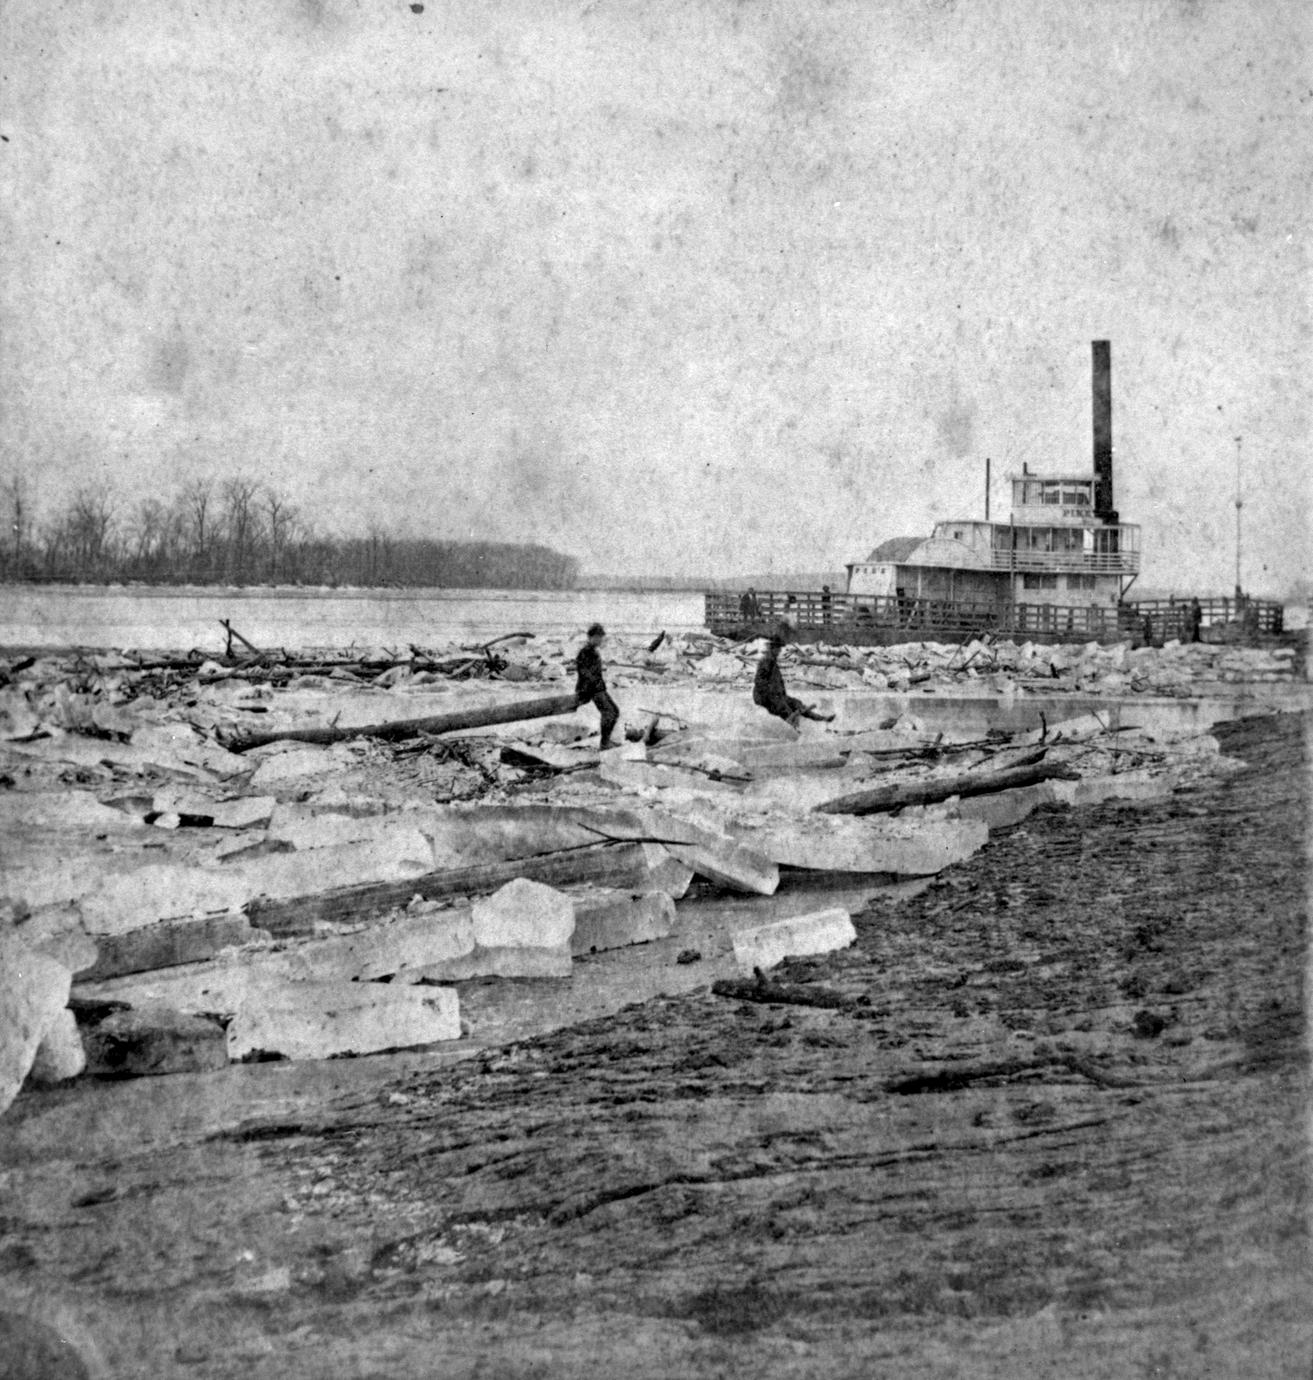 Pike (Ferry, 1870s?)